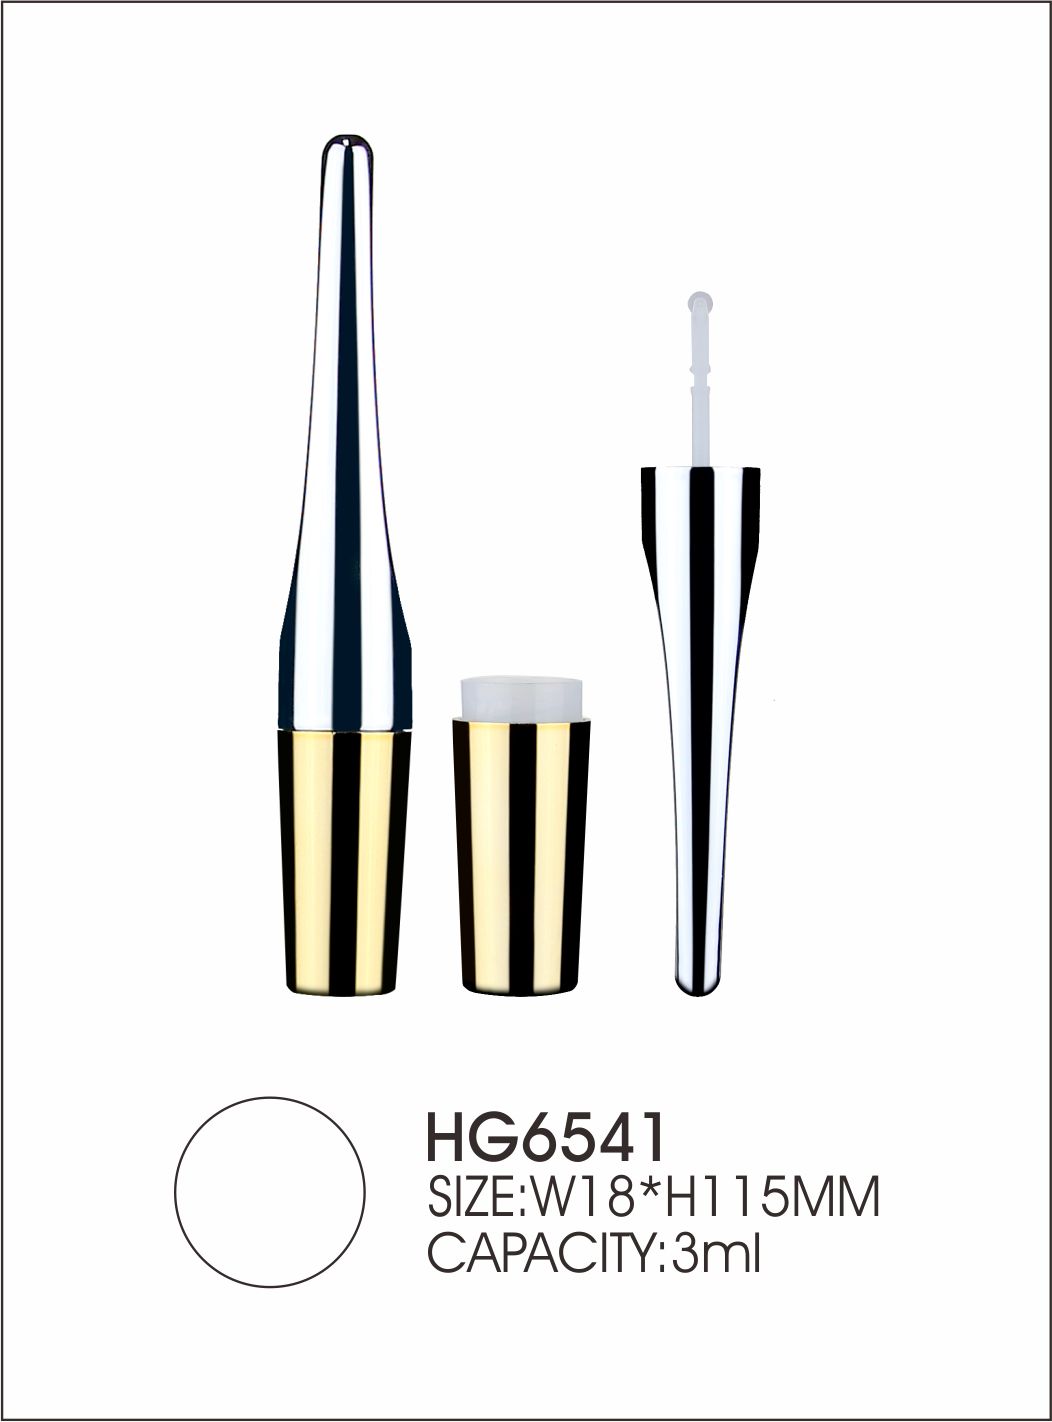 HG6541